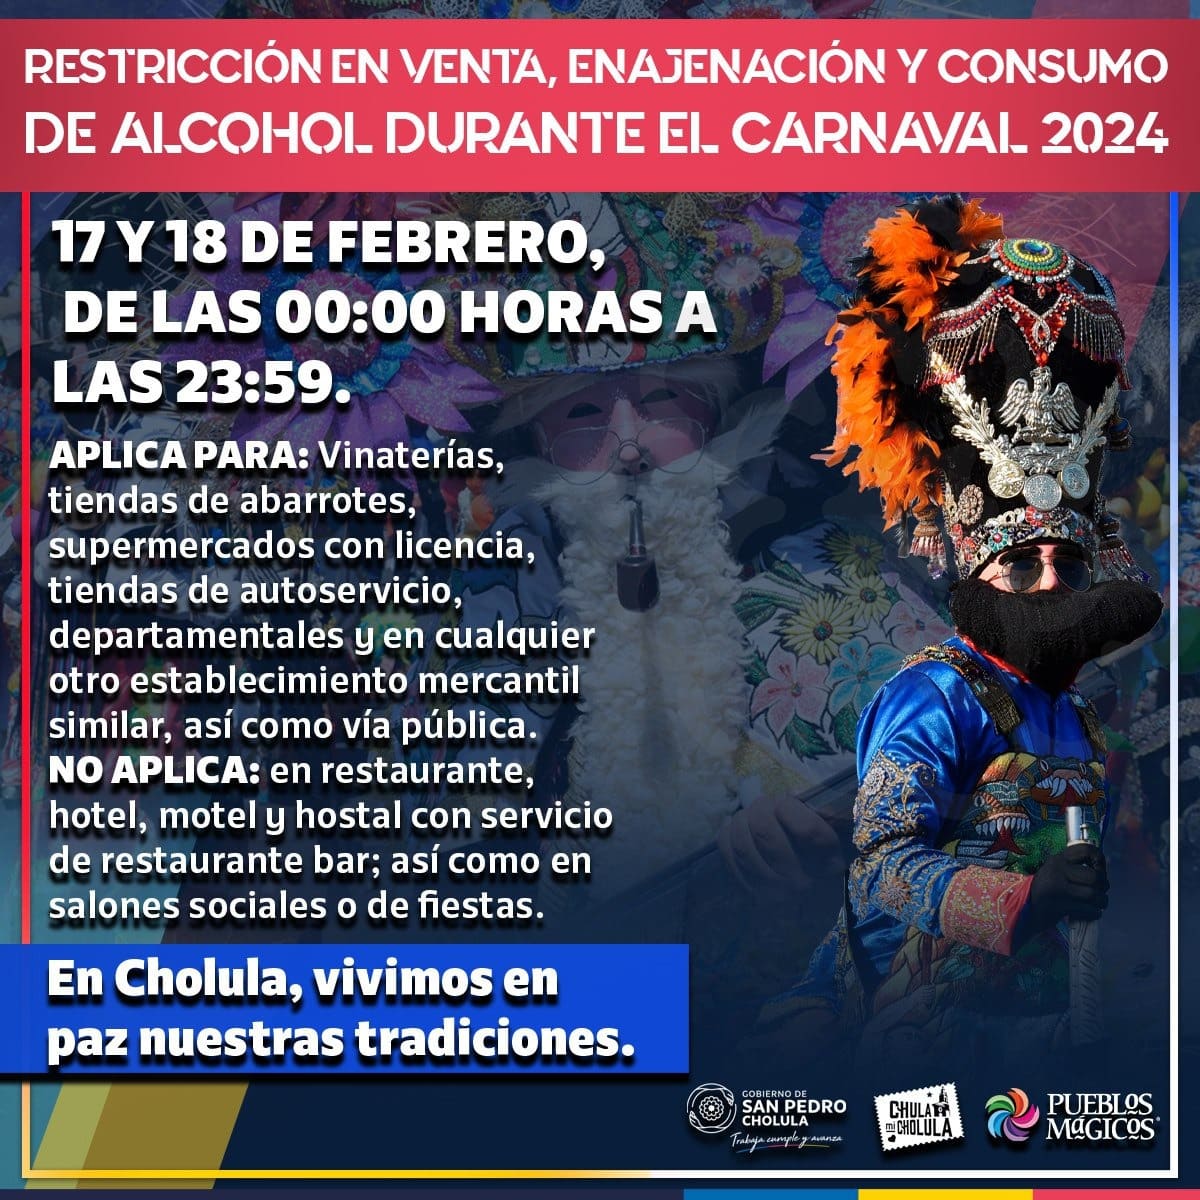 San Pedro Cholula limita consumo de alcohol durante su Carnaval 2024